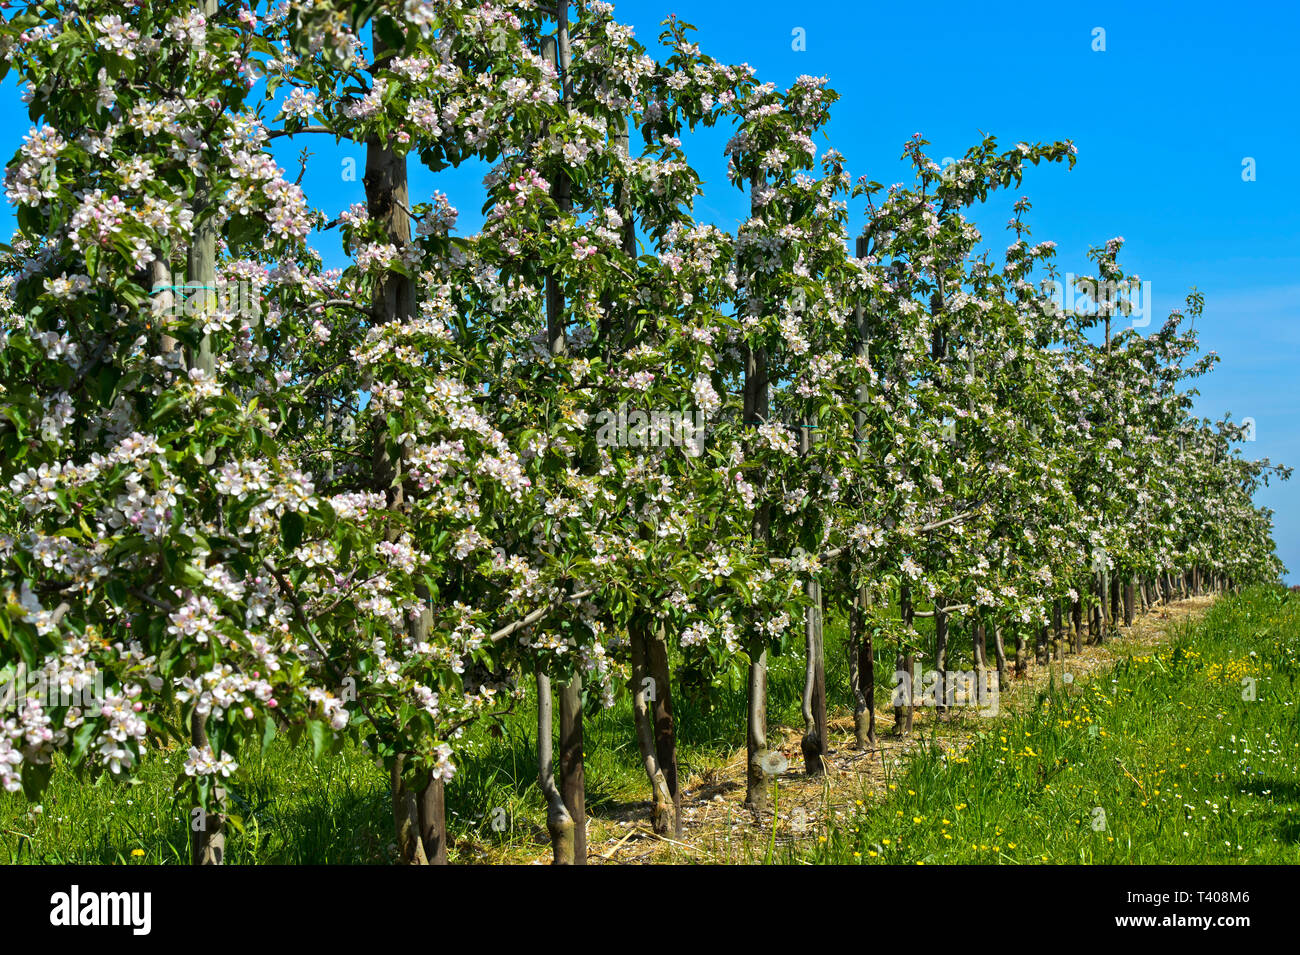 Blühende Apfelbäume im Halb-standard Baum Anbau, Kanton Thurgau, Schweiz  Stockfotografie - Alamy